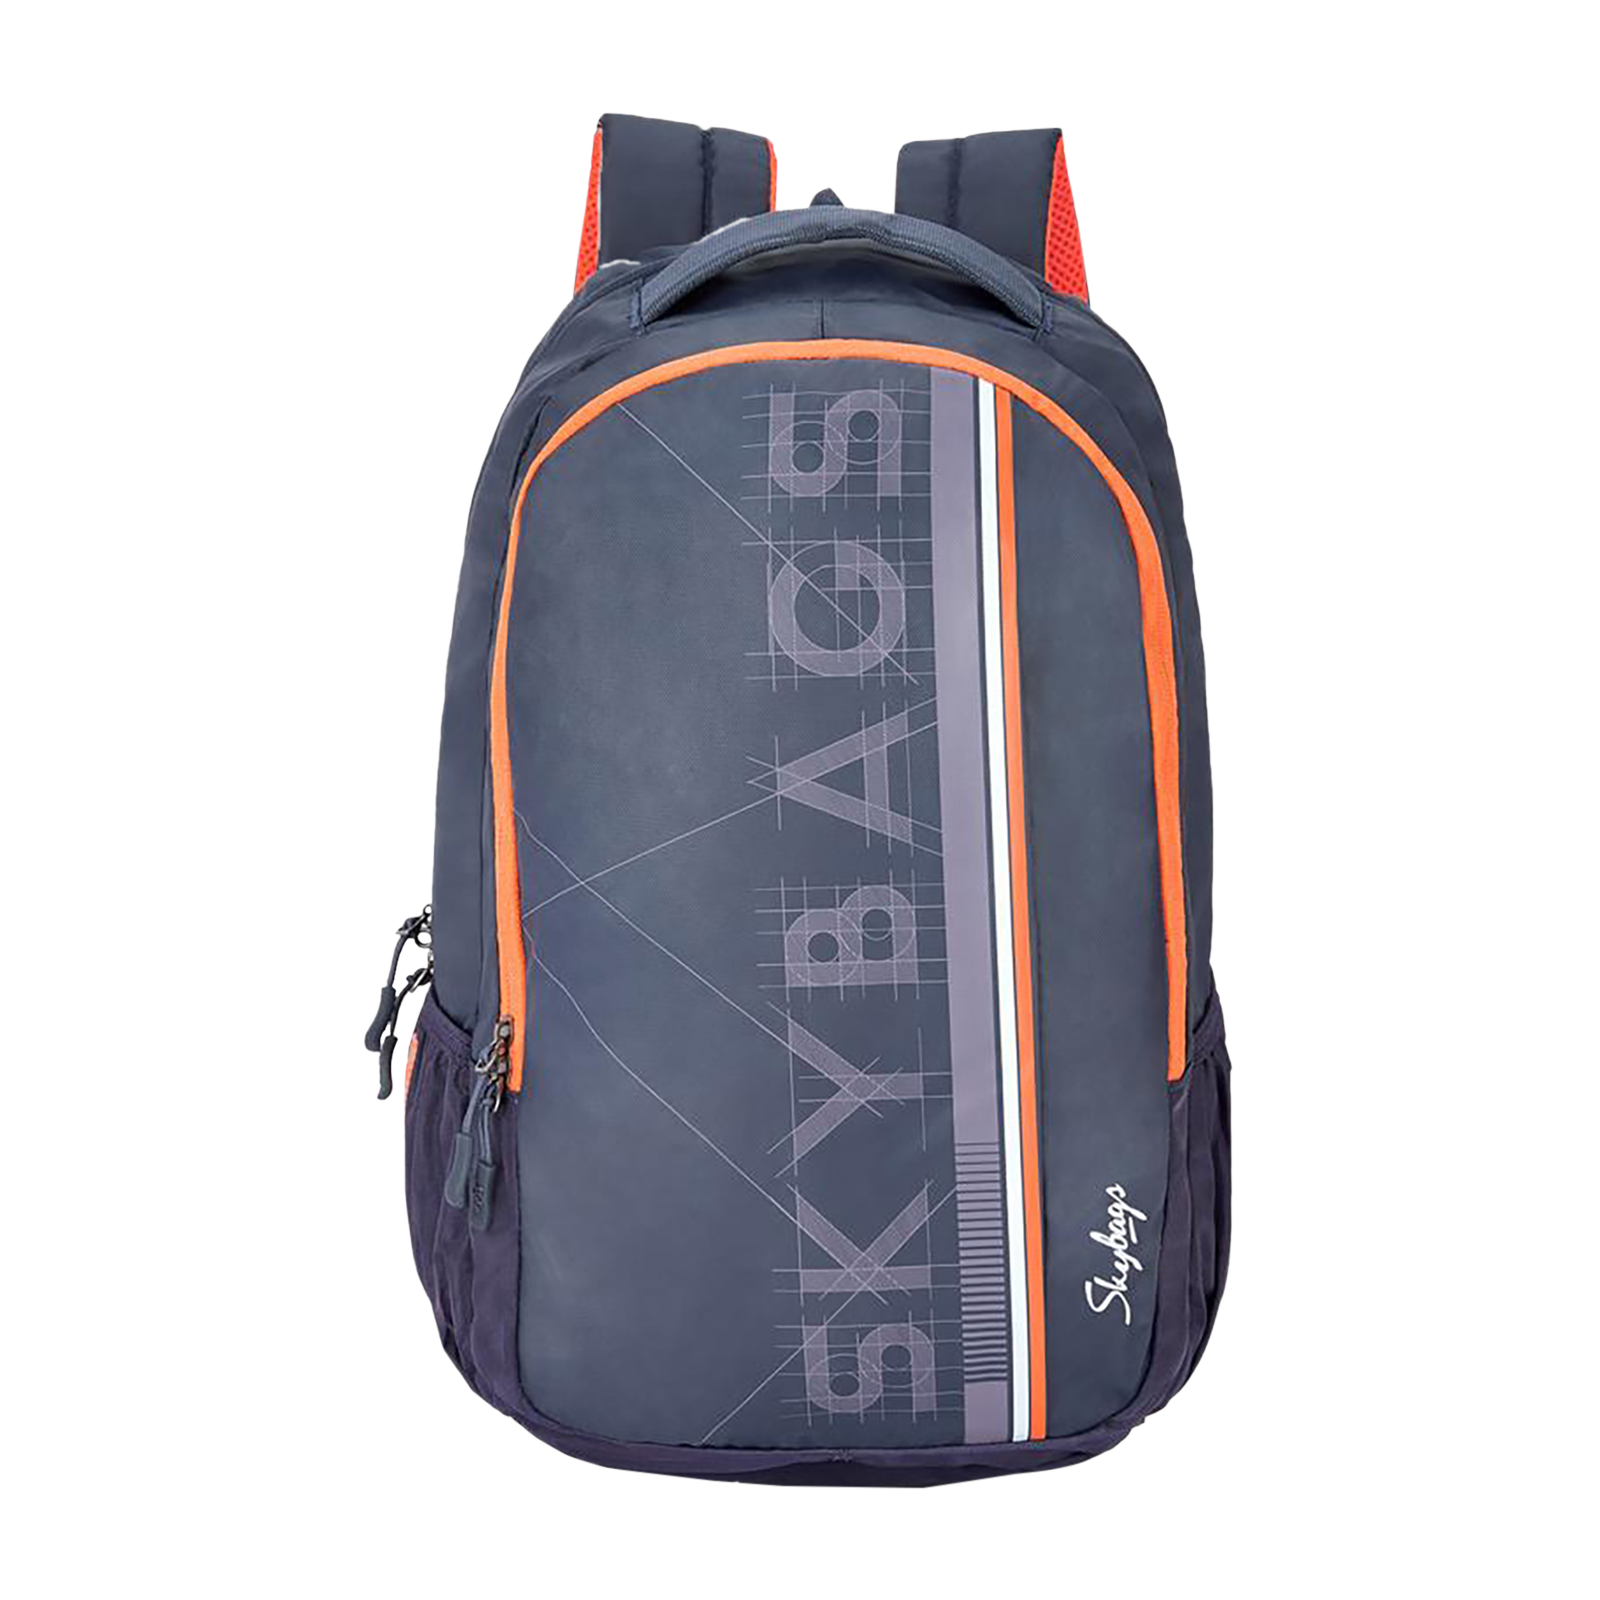 Share 88+ sky bags for men latest - in.duhocakina